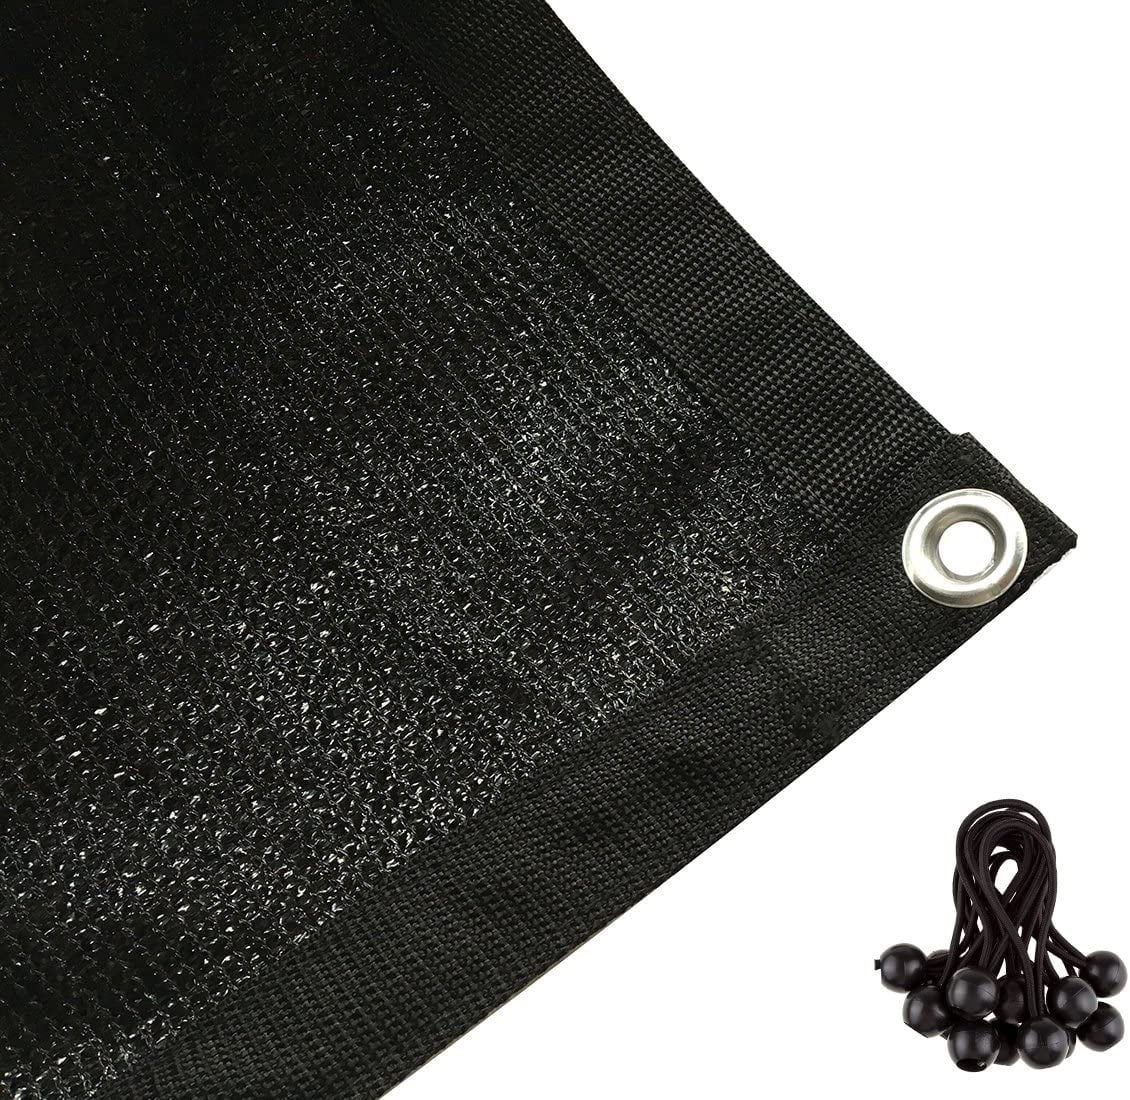 Shatex 80% Sunblock UV Black Outdoor Garden Canopy Shade Cloth Fabric 10x16ft 